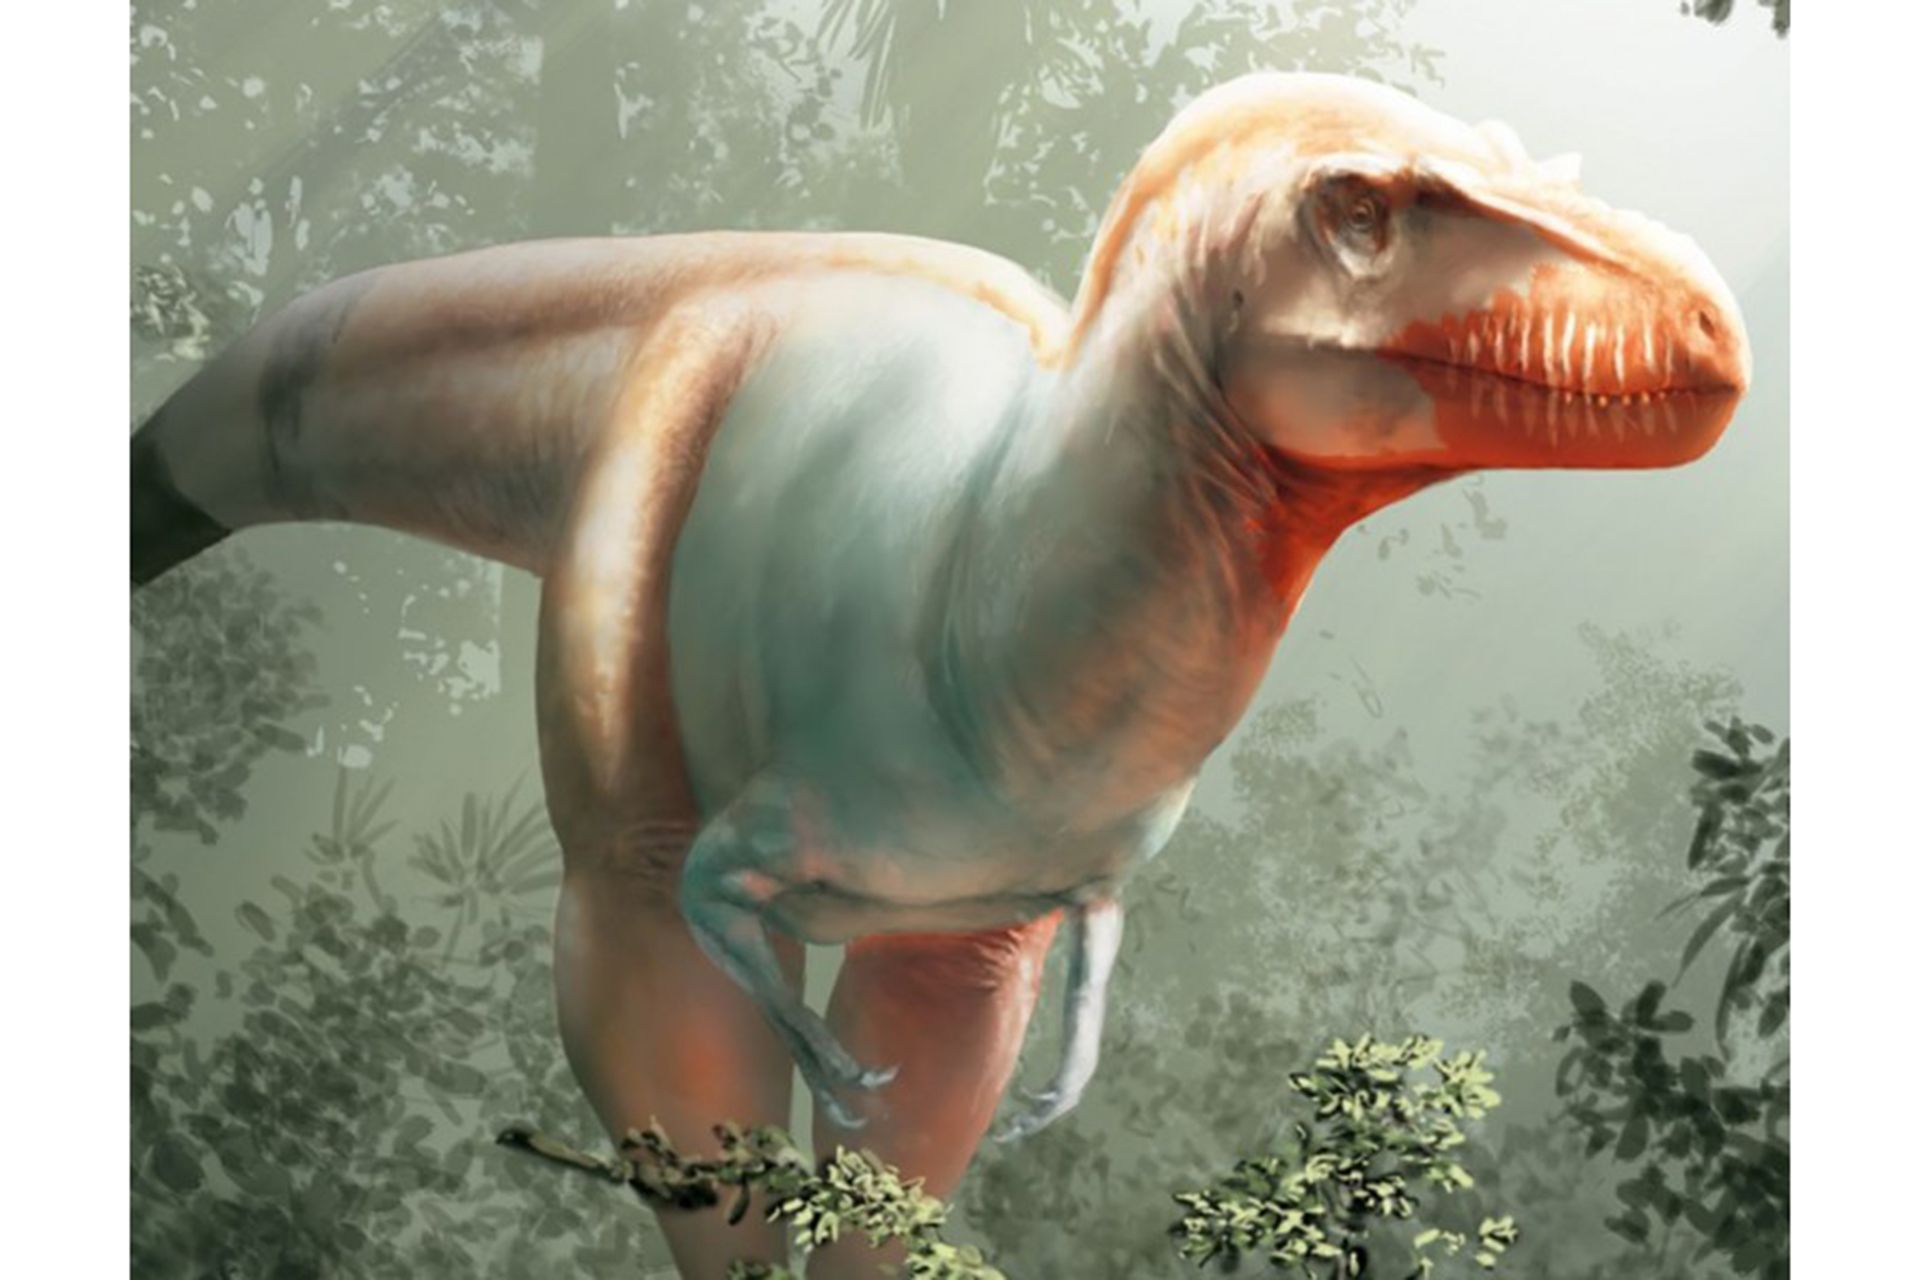 coolest dinosaur findings of 2020/کشف های جالب دایناسورها